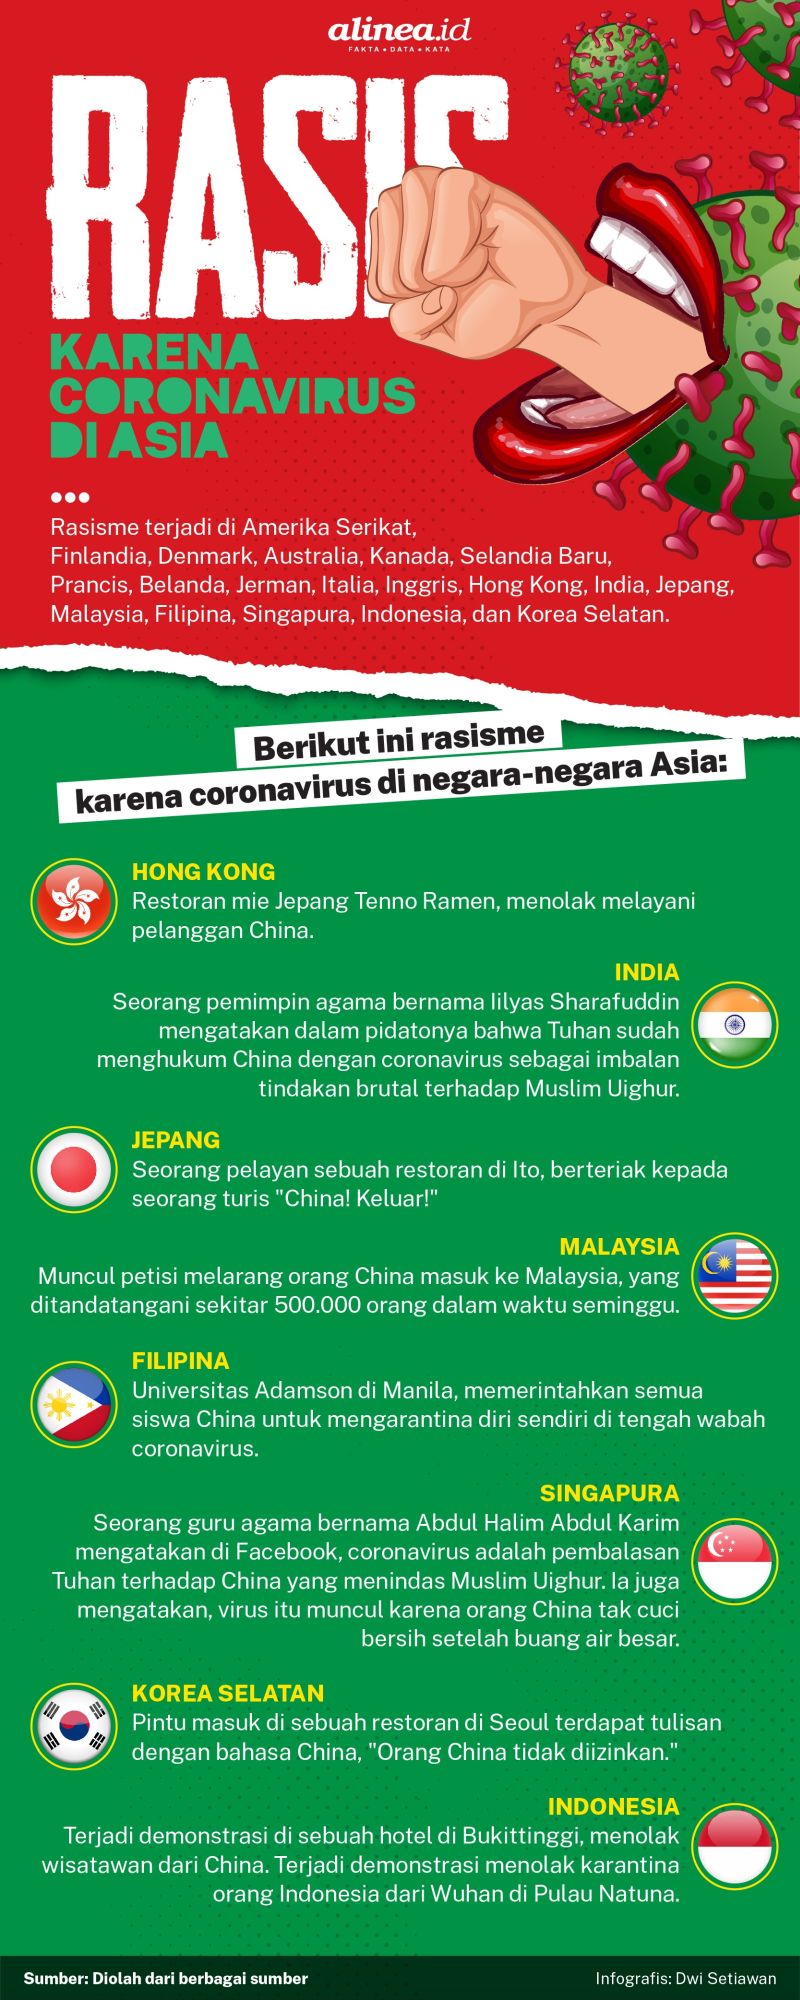 Infografik rasisme coronavirus. Alinea.id/Dwi Setiawan.